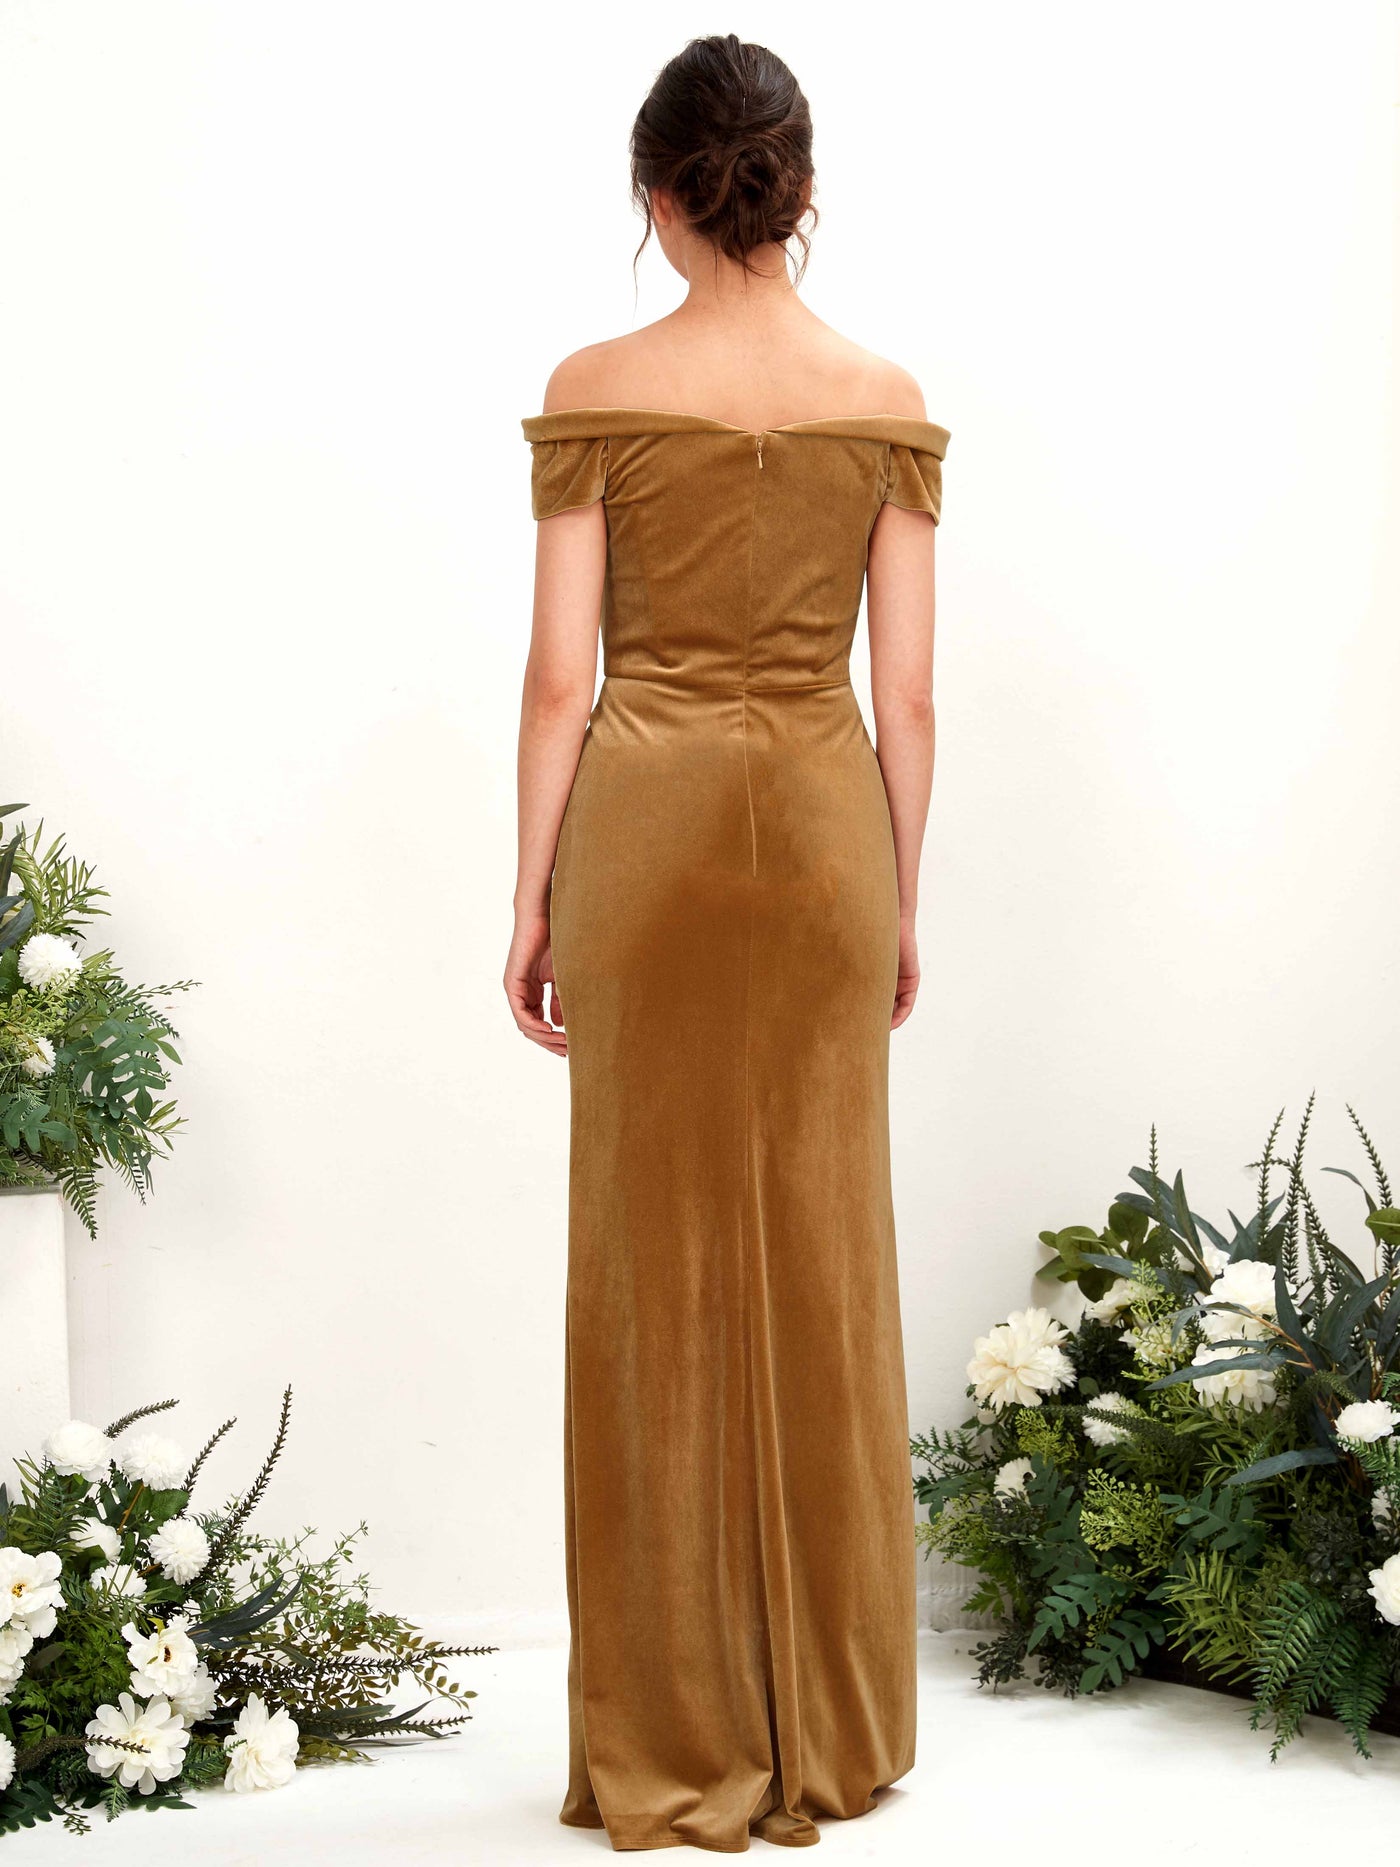 Burnished Gold Bridesmaid Dresses Bridesmaid Dress Ball Gown Velvet Off Shoulder Full Length Short Sleeves Wedding Party Dress (80220416)#color_burnished-gold